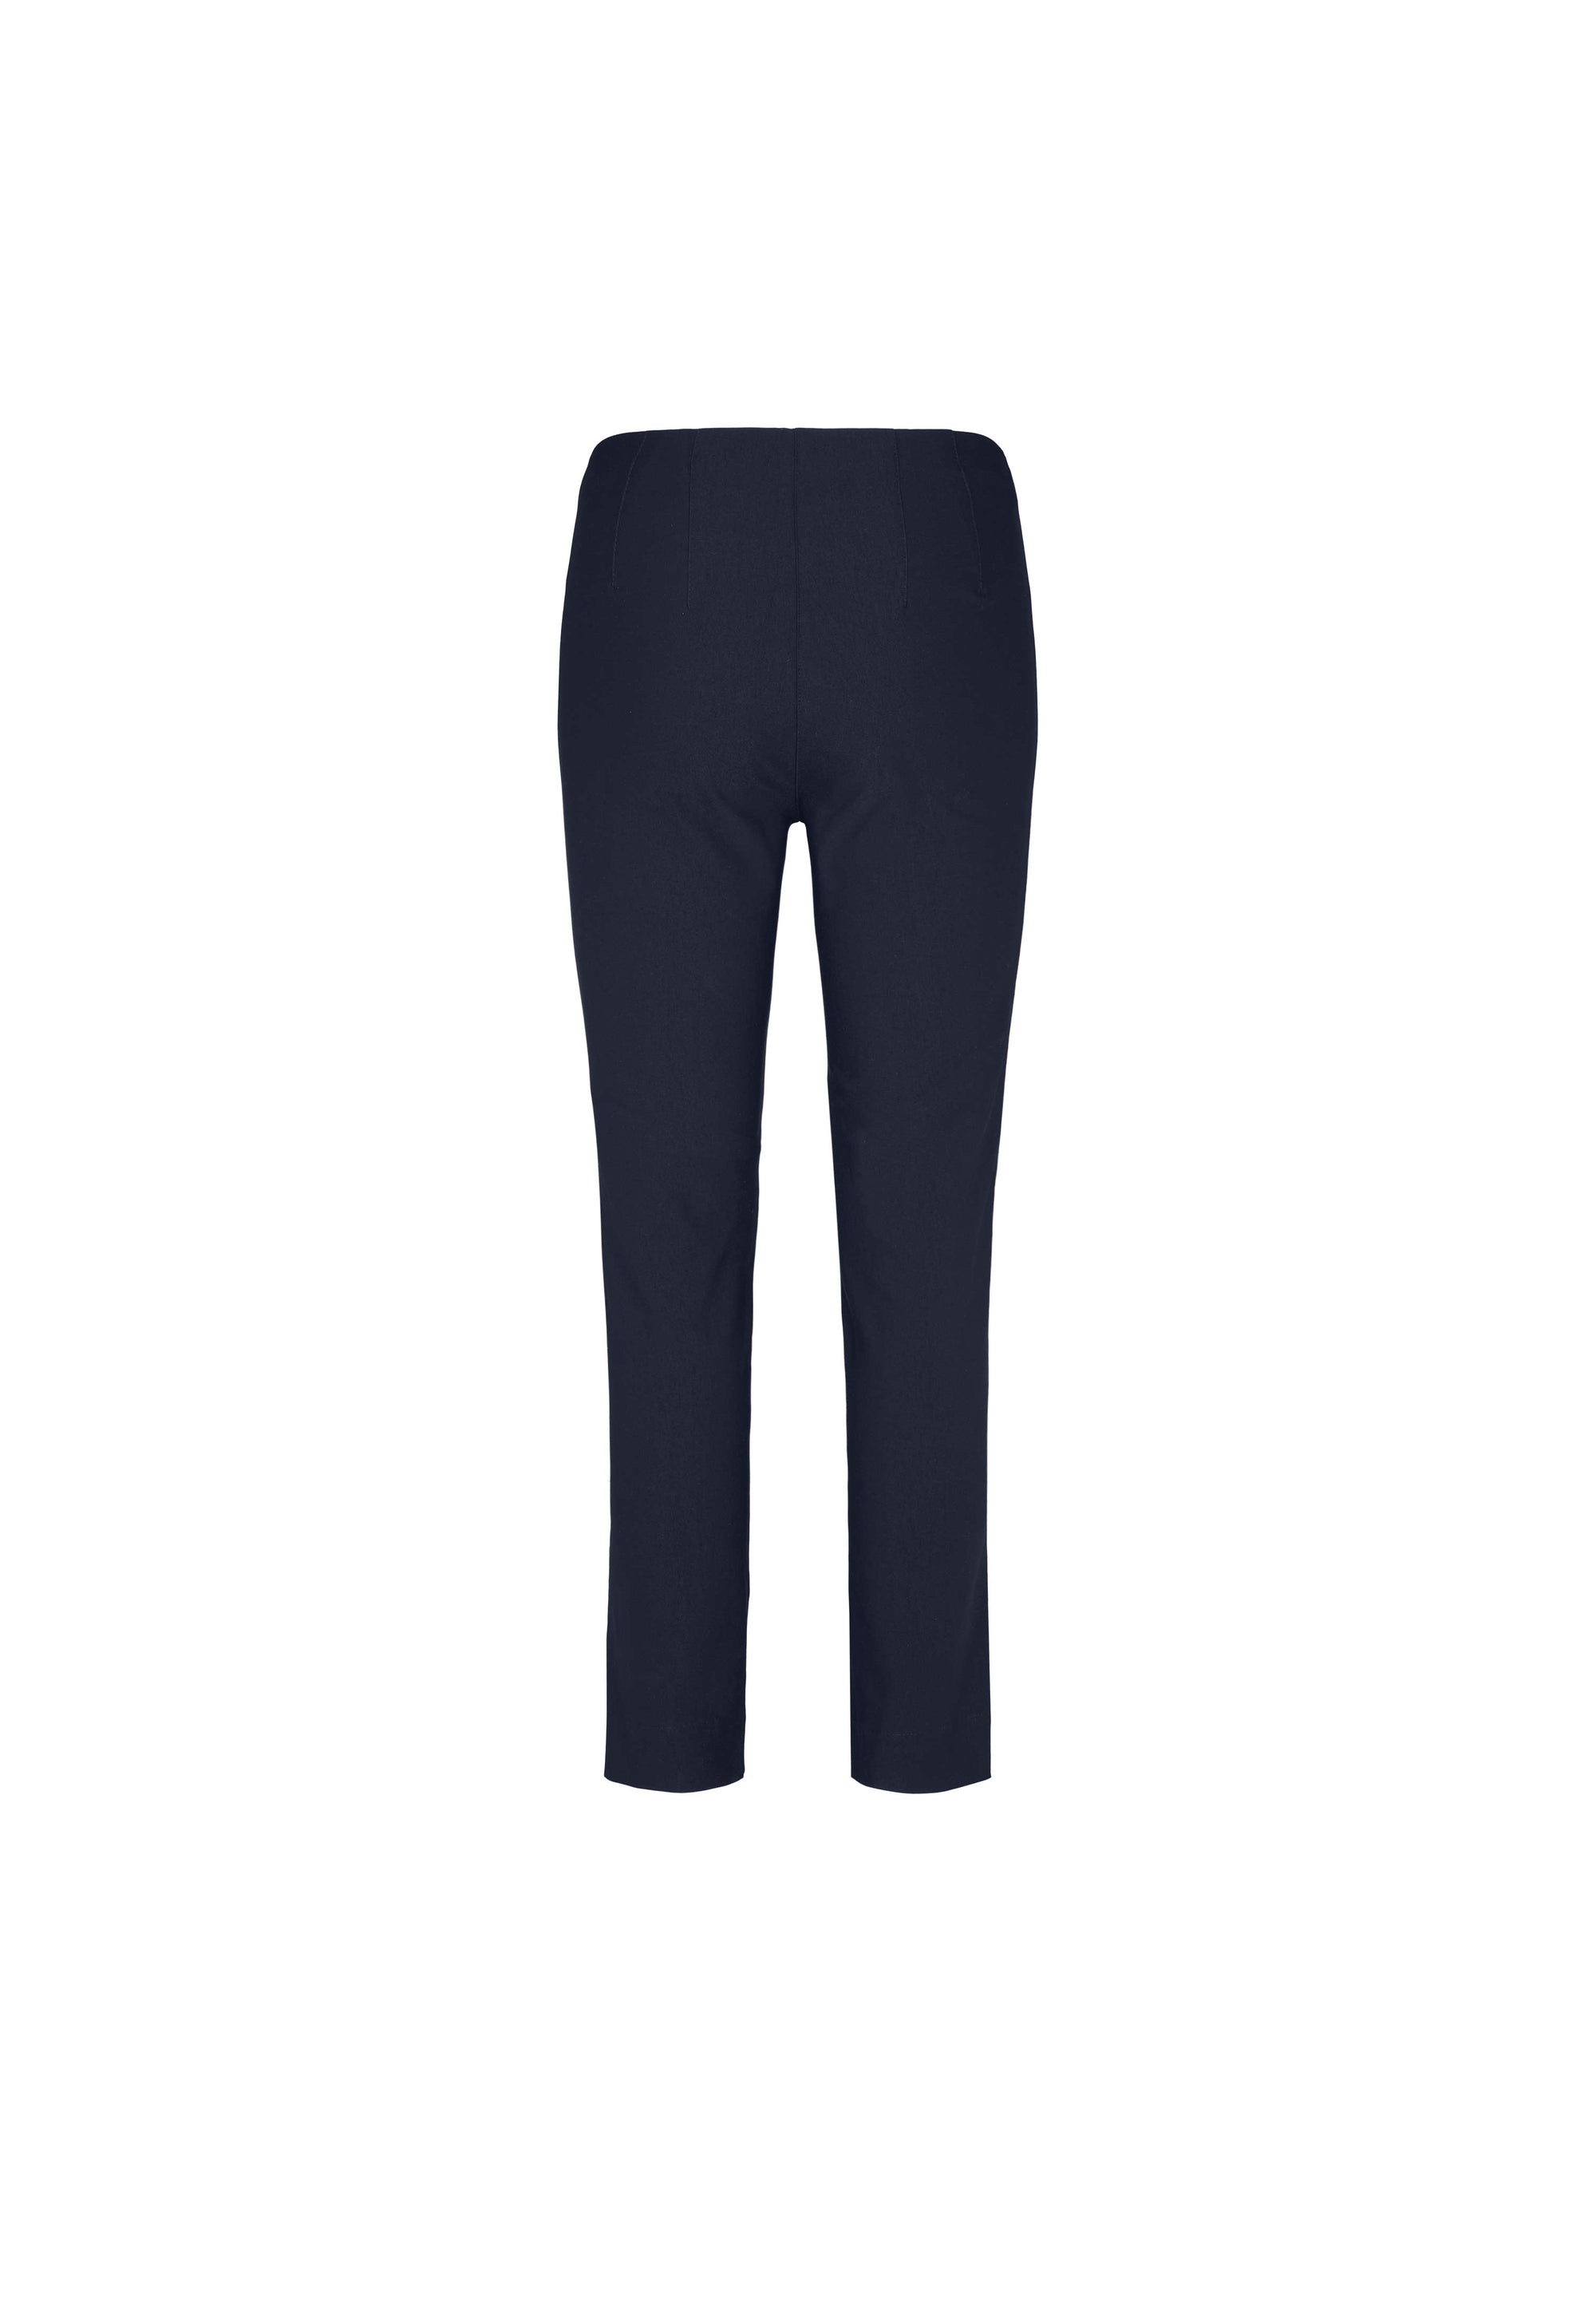 LAURIE Vicky Slim - Short Length Trousers SLIM 49970 Navy